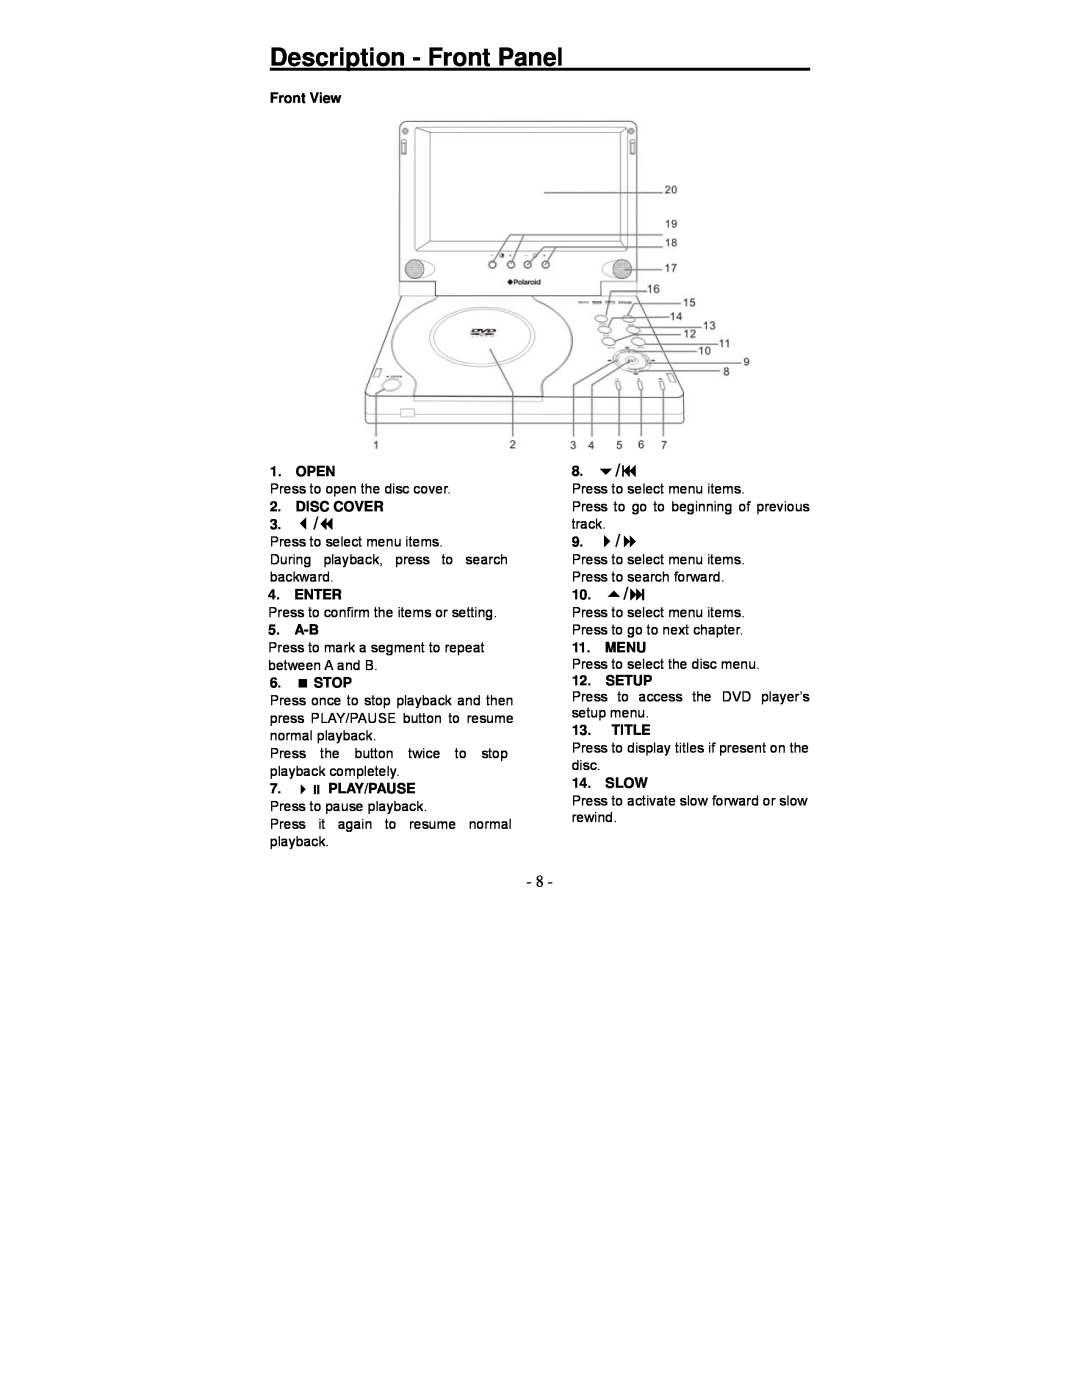 Polaroid PDV-0713A Description - Front Panel, Front View 1. OPEN, Disc Cover, Enter, A-B, Stop, Play/Pause, Menu, Setup 